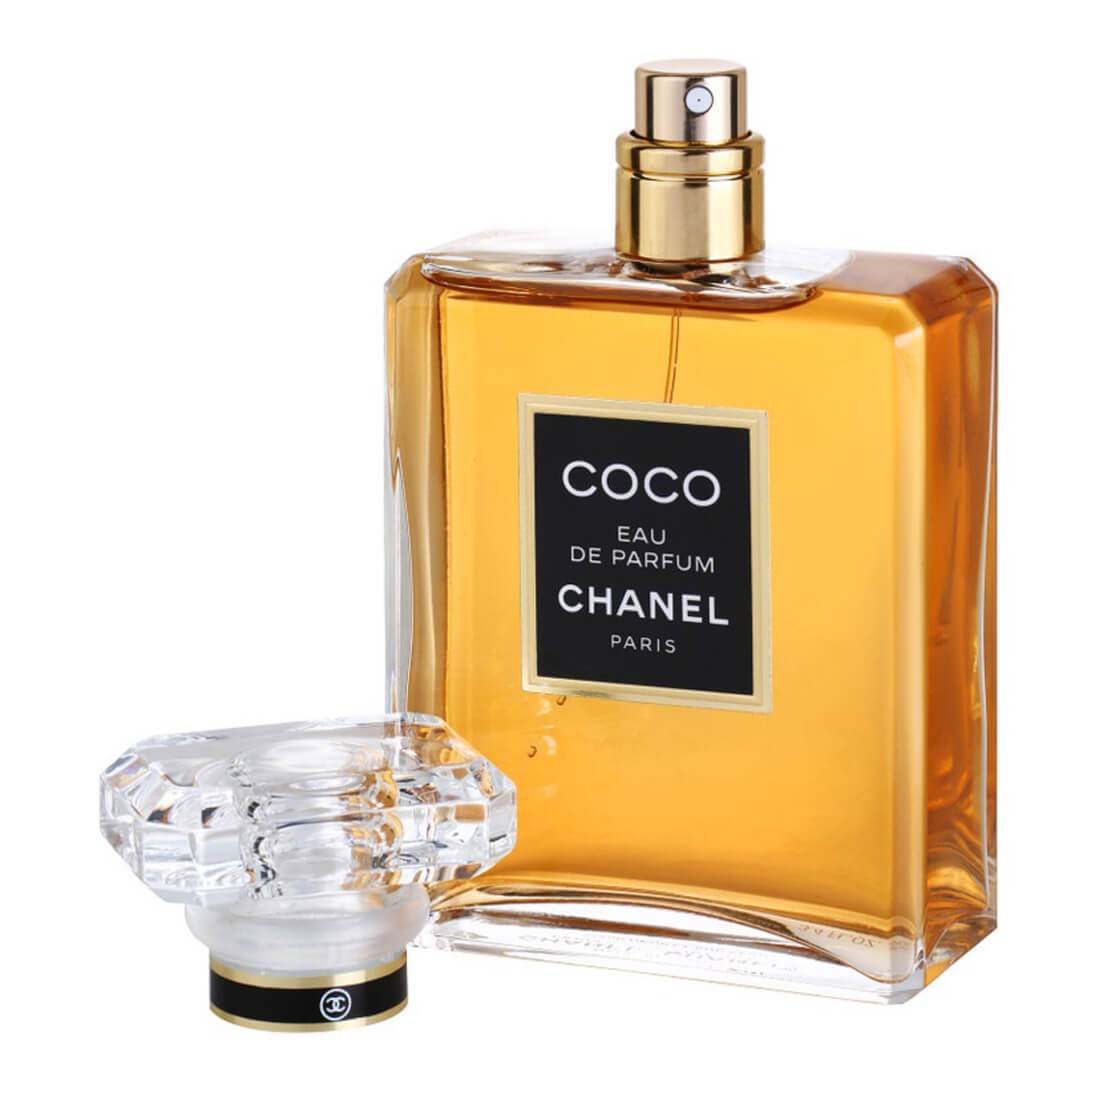 coco chanel perfume smells like